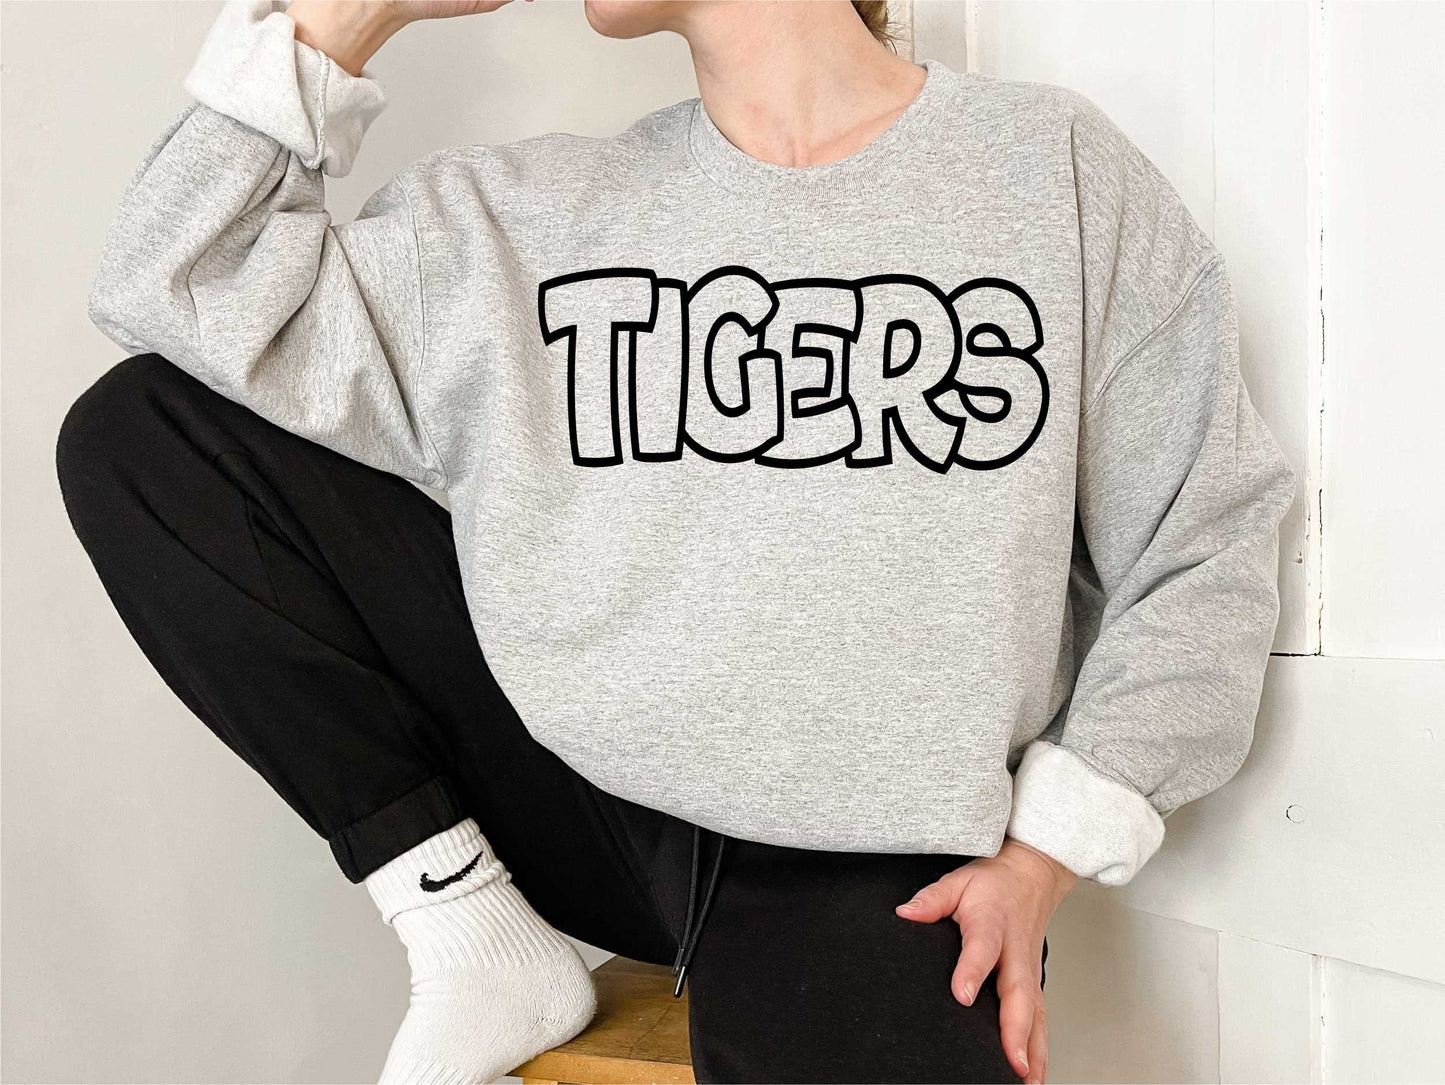 Tigers svg, Tigers Outline svg, Tigers shirt svg, Digital Design, Tigers Mascot